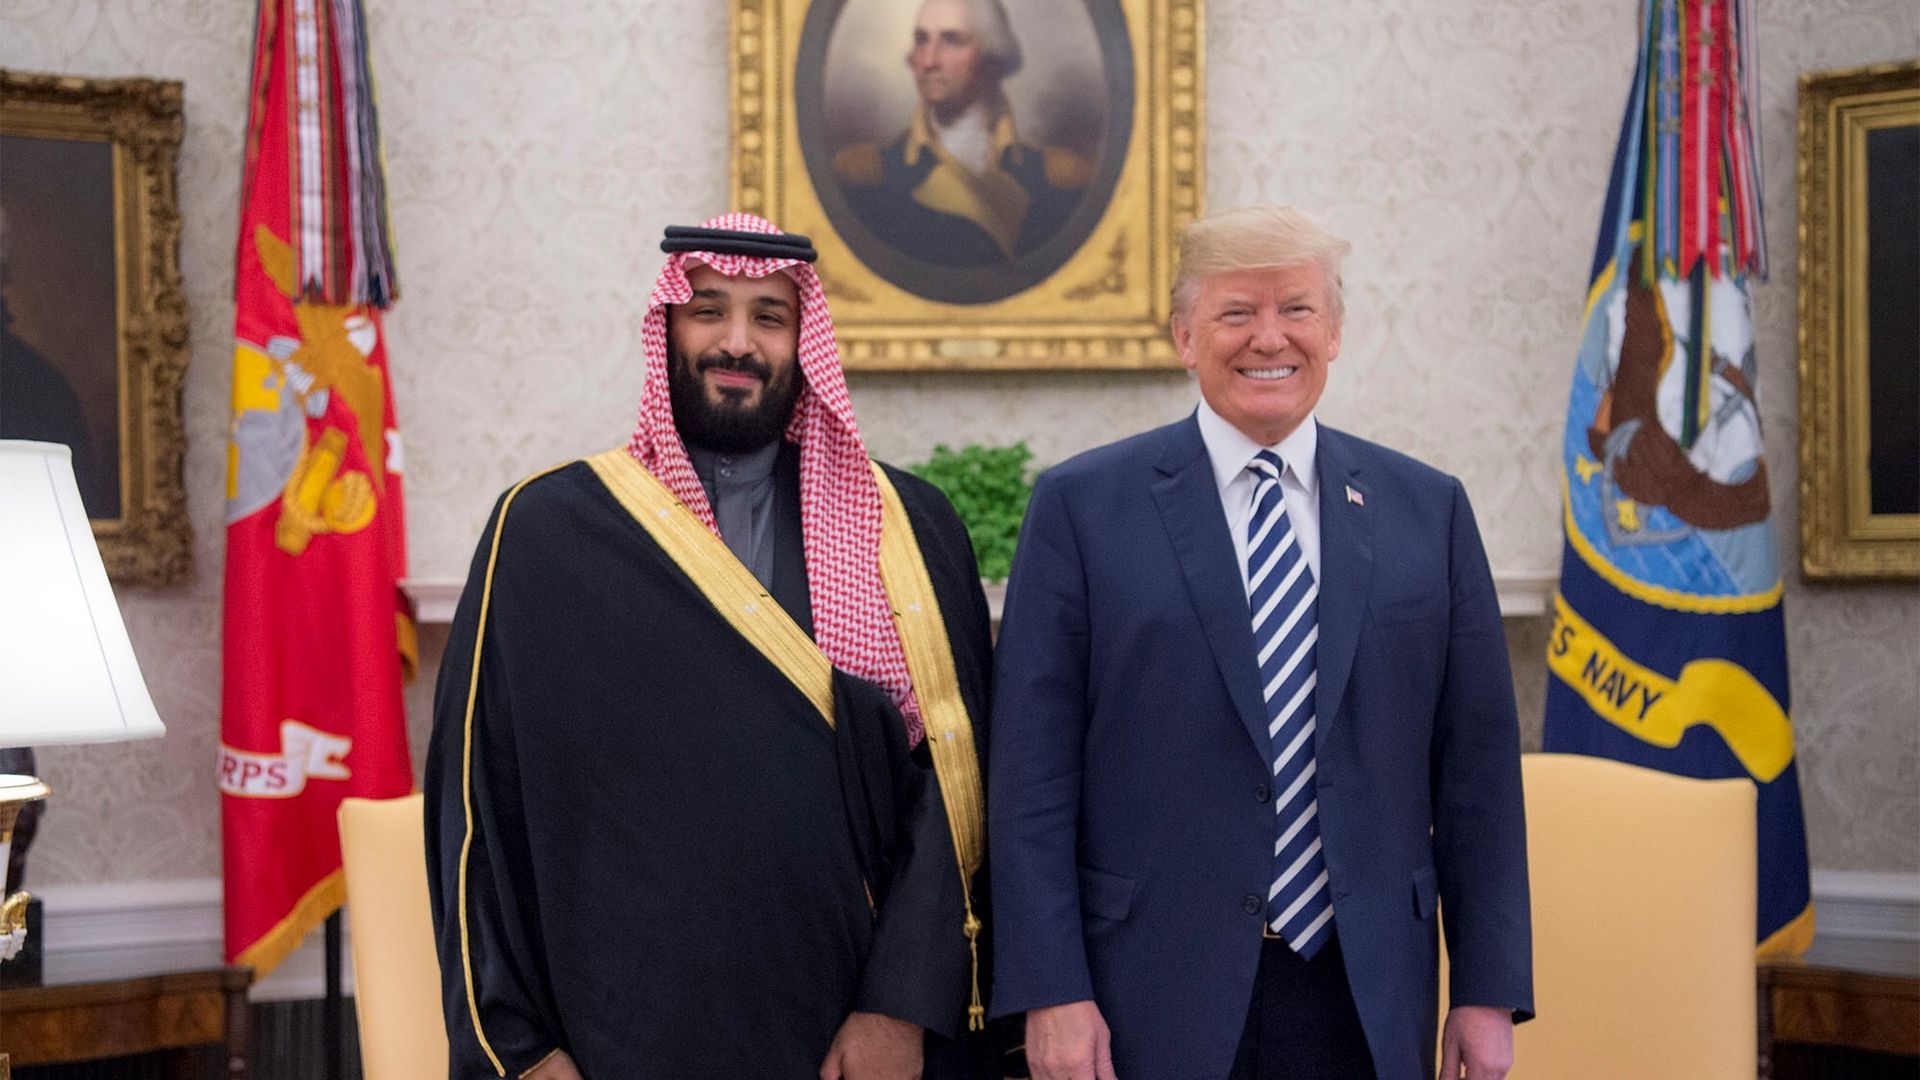 President Trump and Crown Prince Mohammed bin Salman